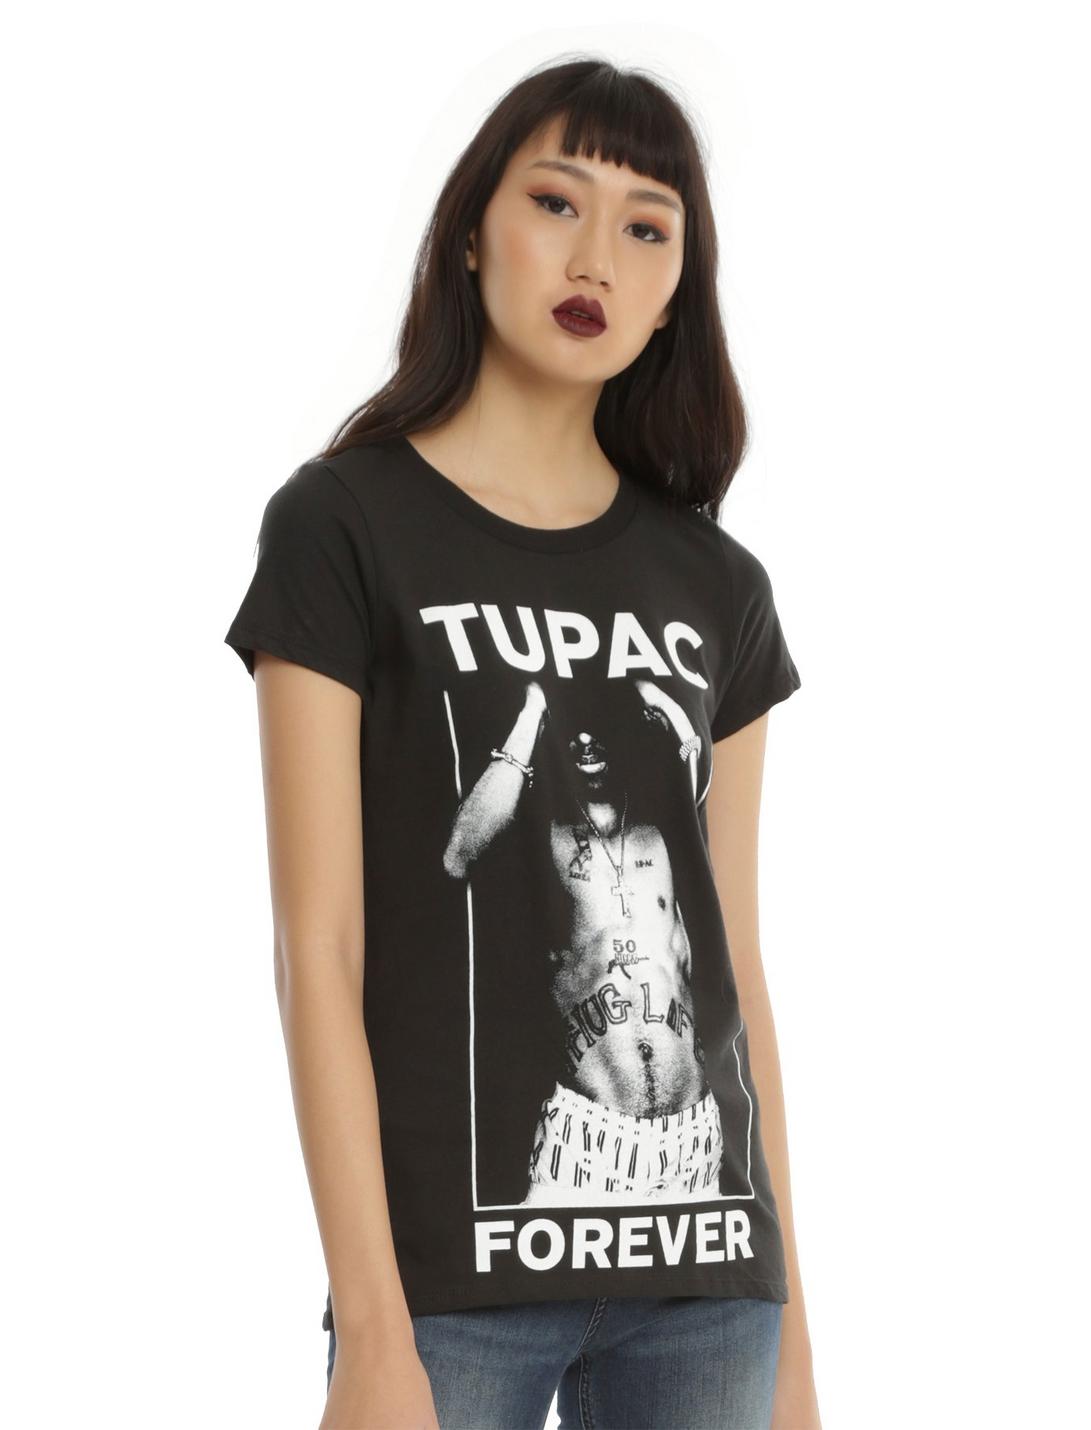 Tupac Forever Girls T-Shirt, BLACK, hi-res